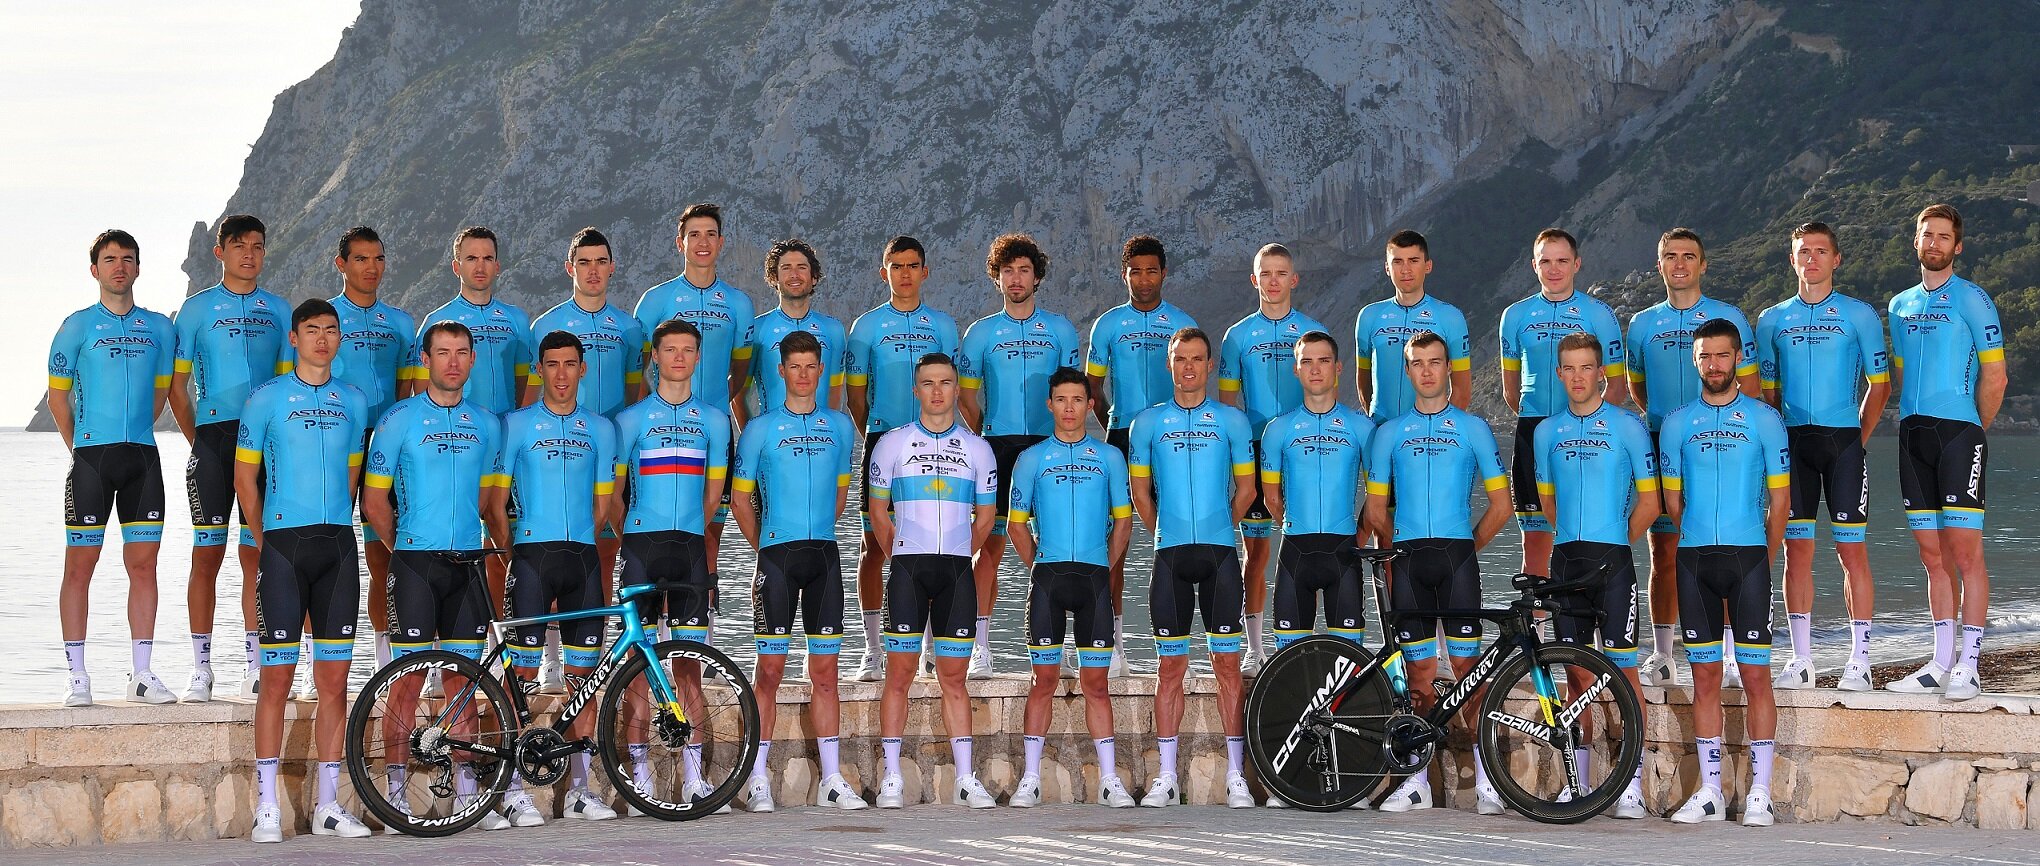 pro cycling team jerseys 2020